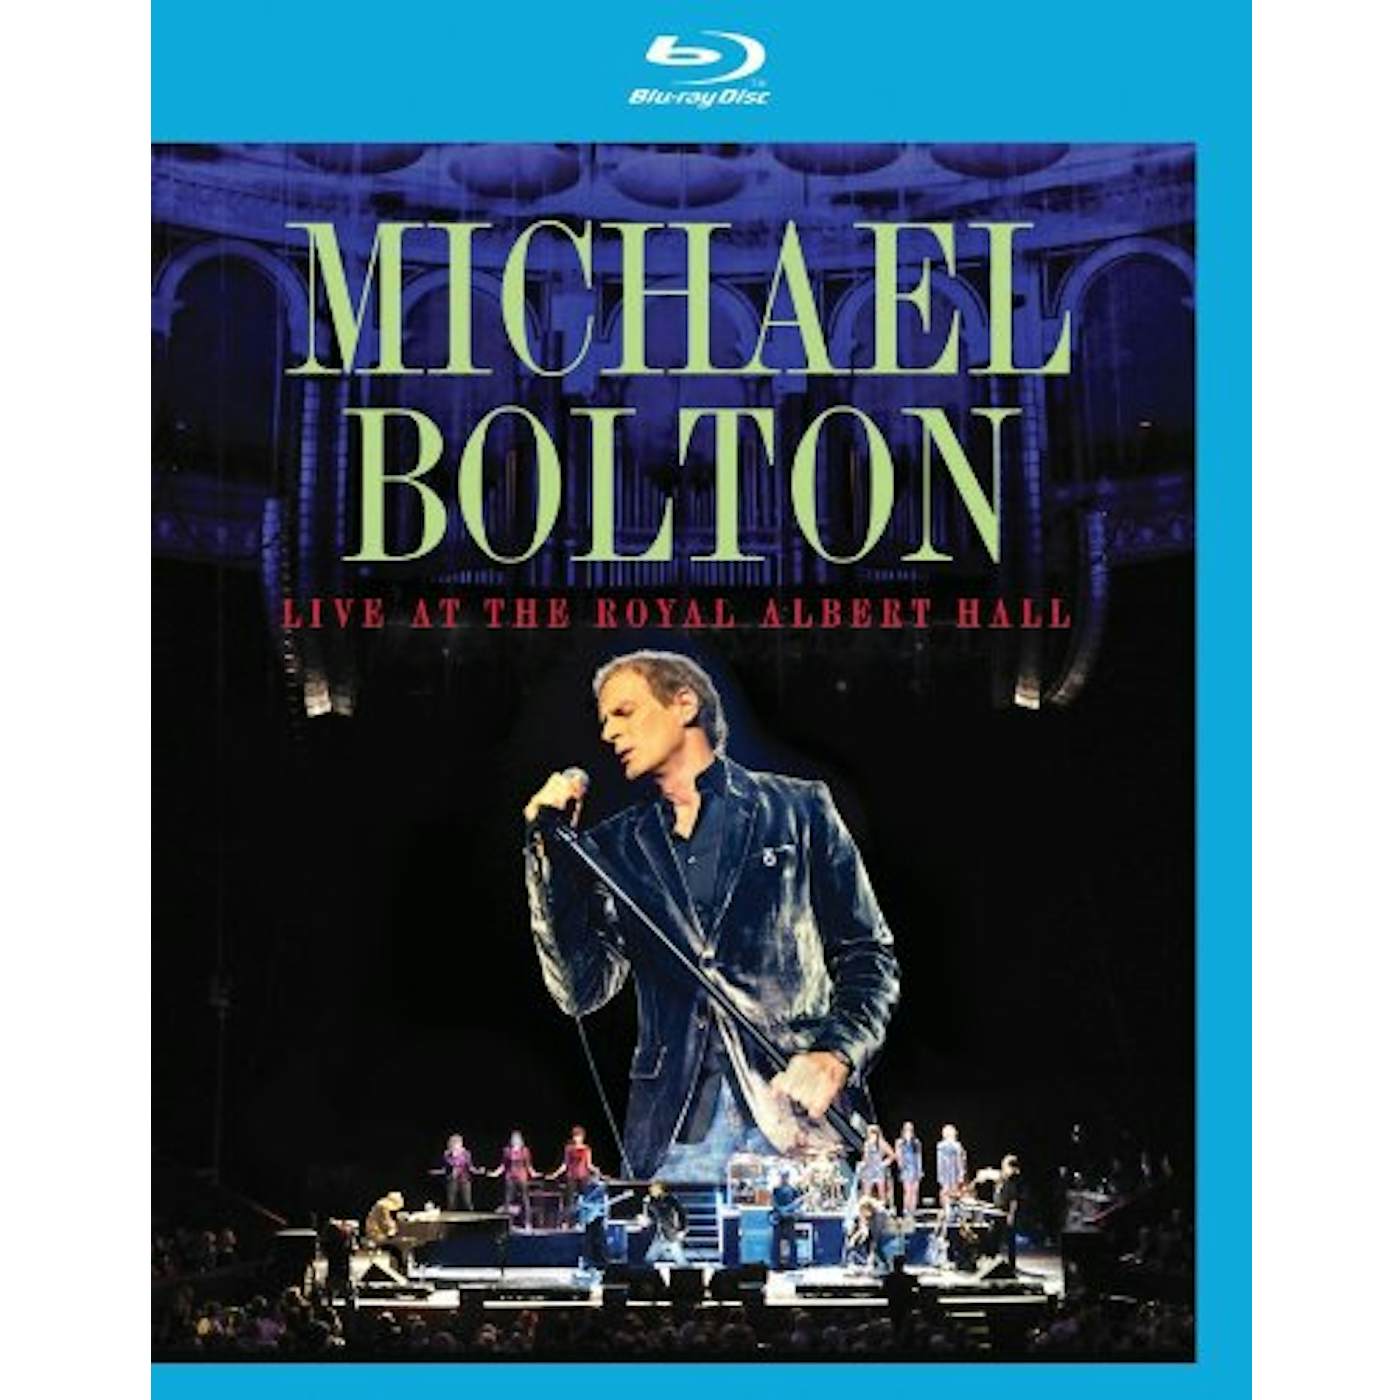 Michael Bolton LIVE AT ROYAL ALBERT HALL Blu-ray